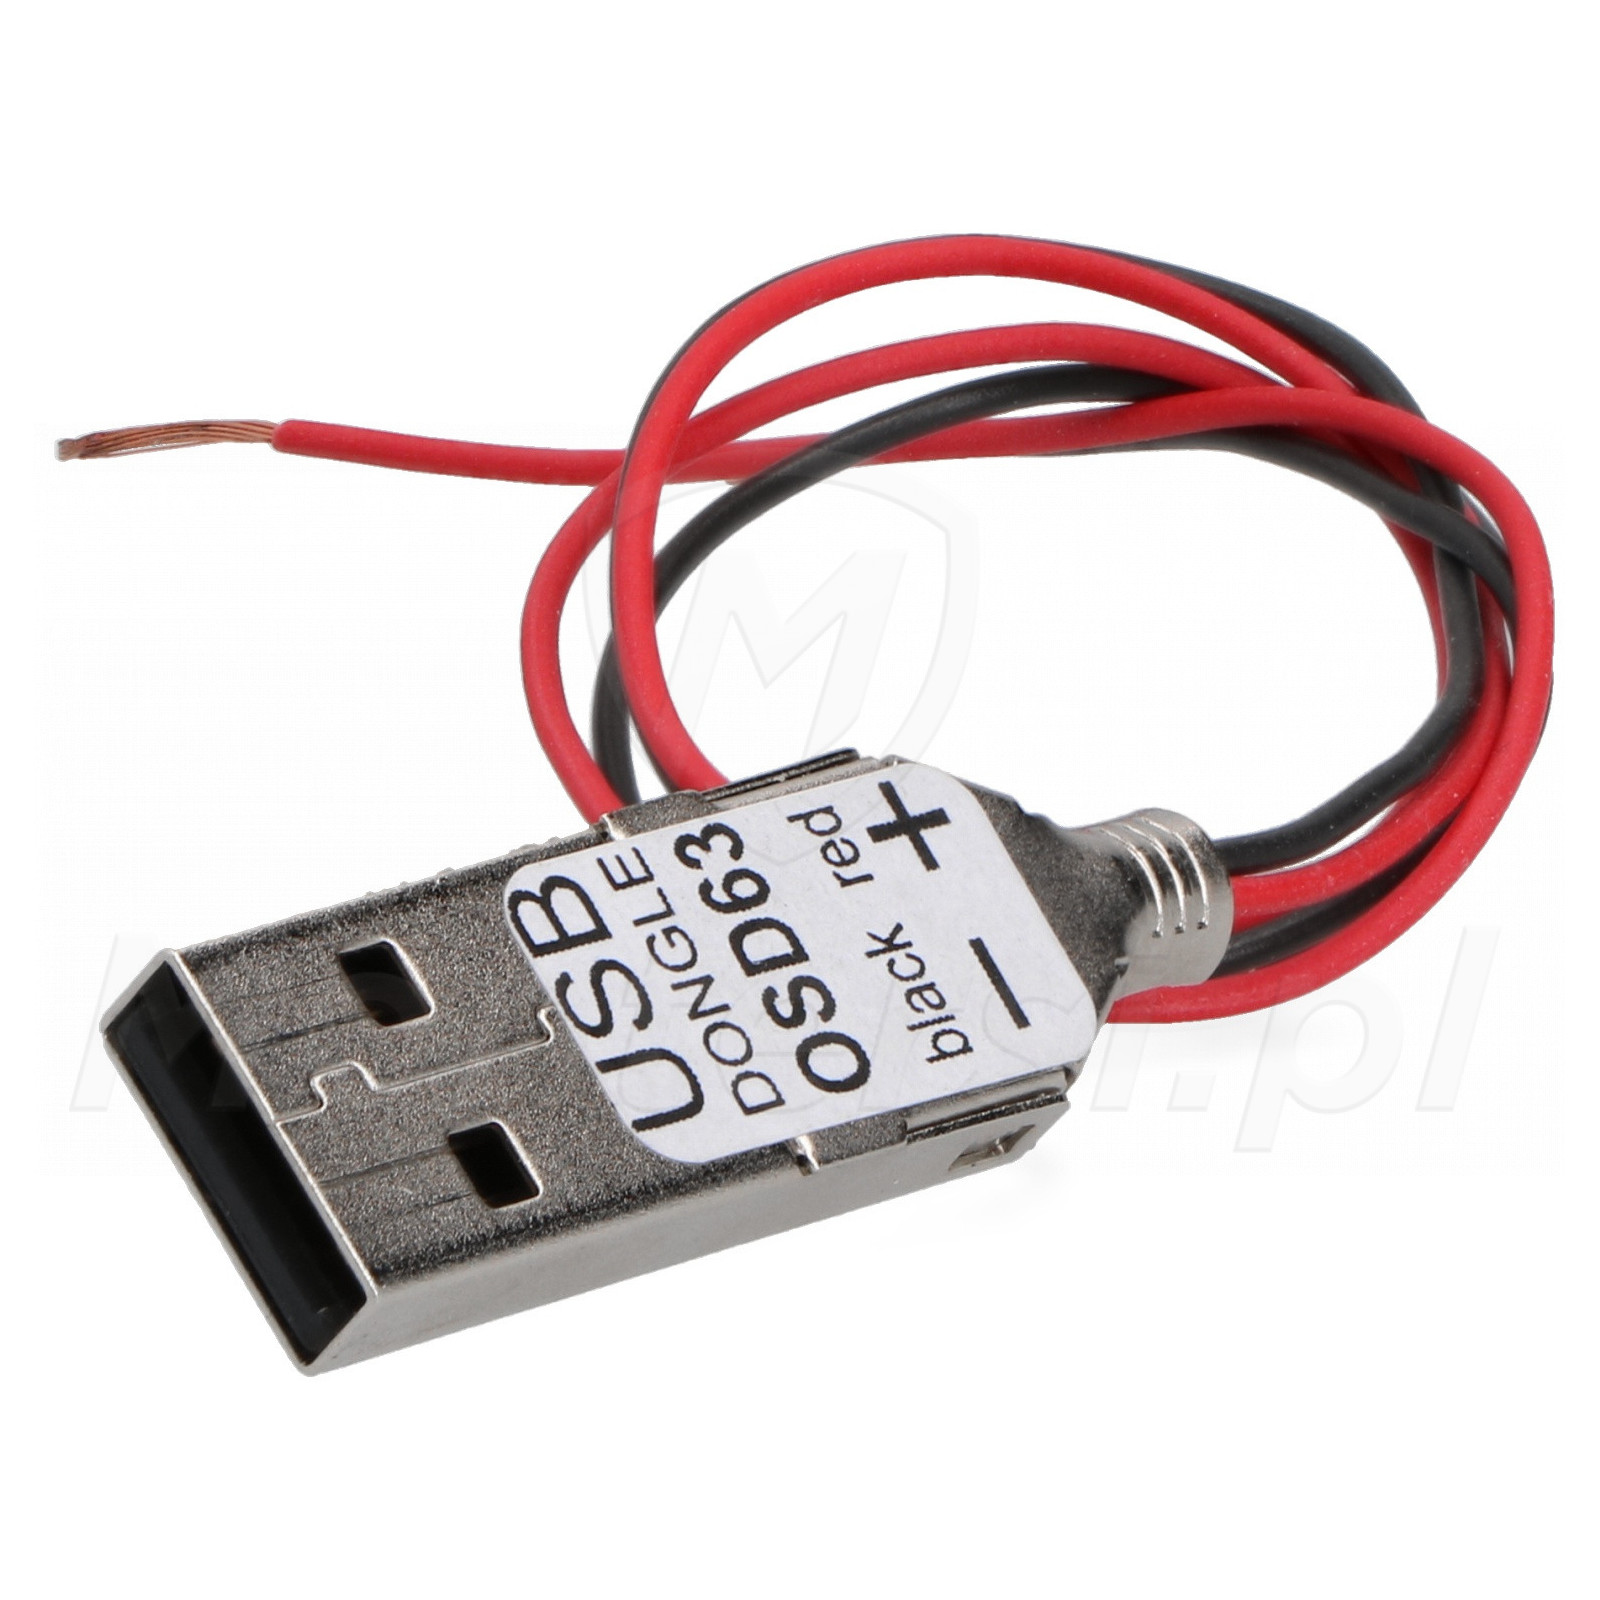 OSD63 DONGLE USB - Moduł konfiguracji